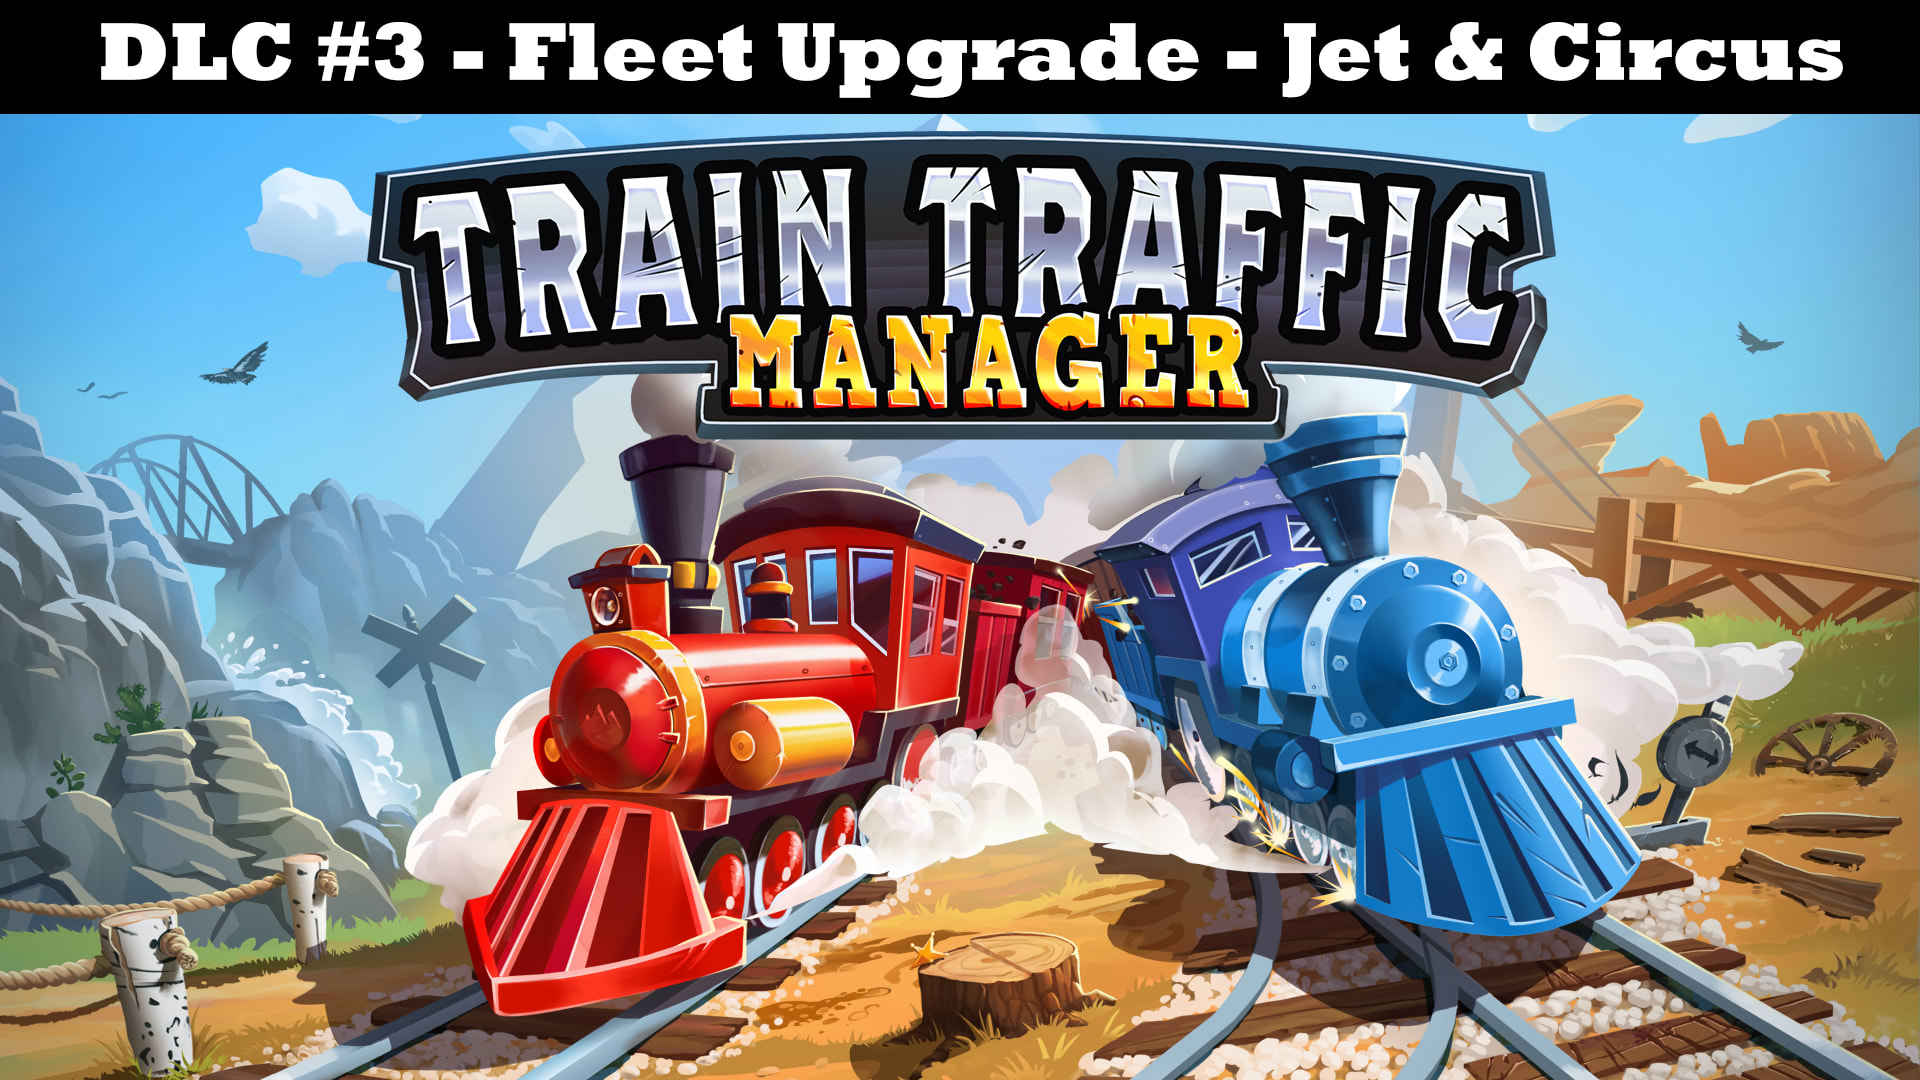 Train Traffic Manager DLC #3 - Fleet Upgrade - Jet & Circus 1